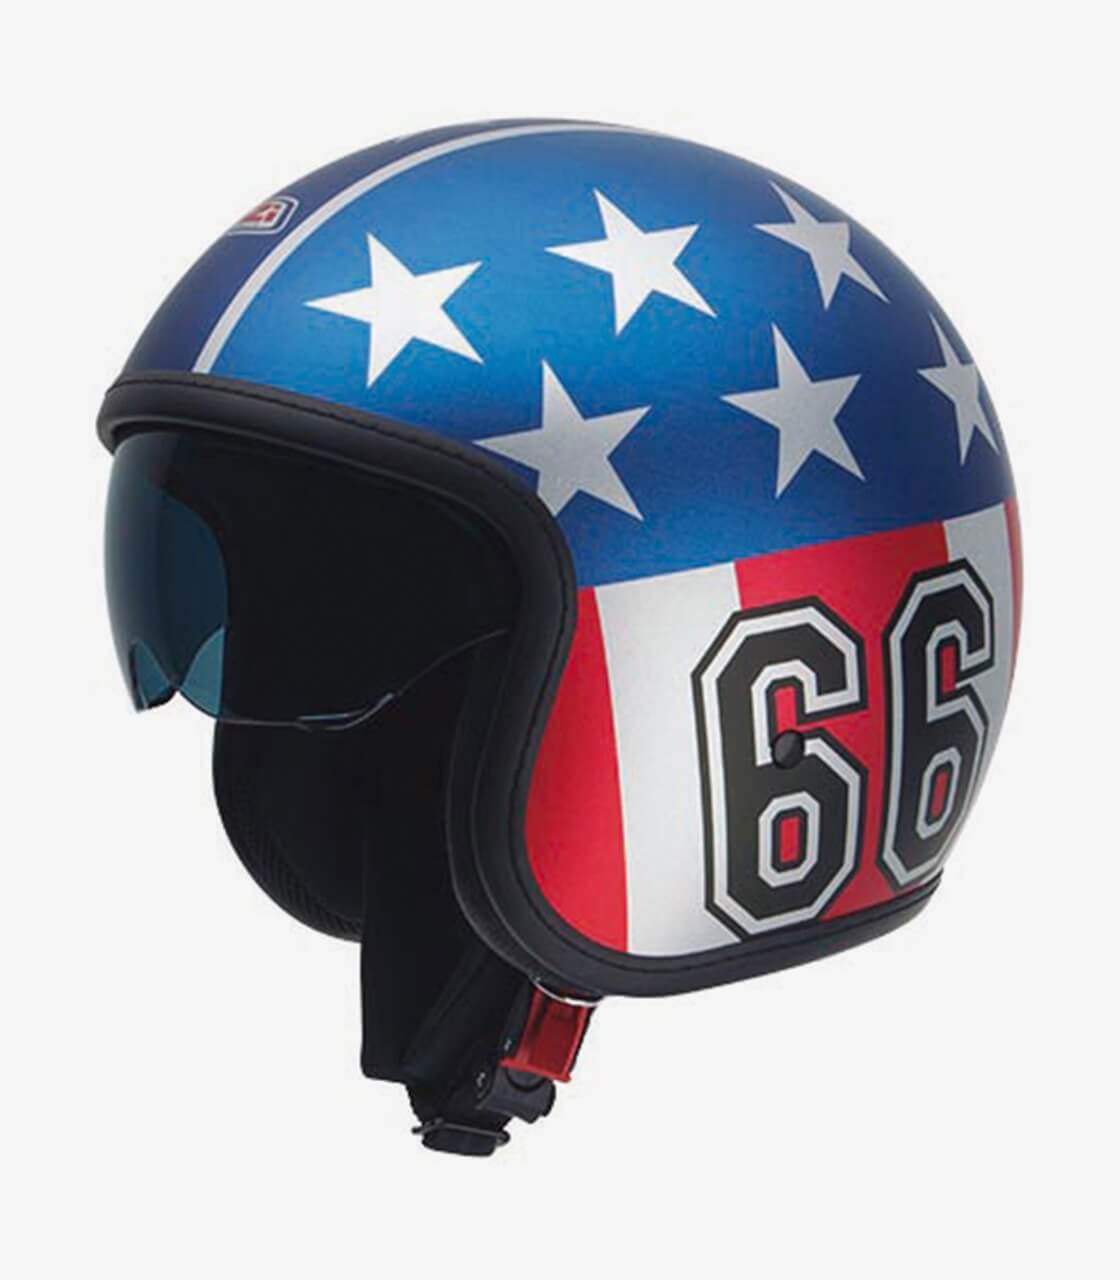 NZI custom jet helmet with the US flag and route 66